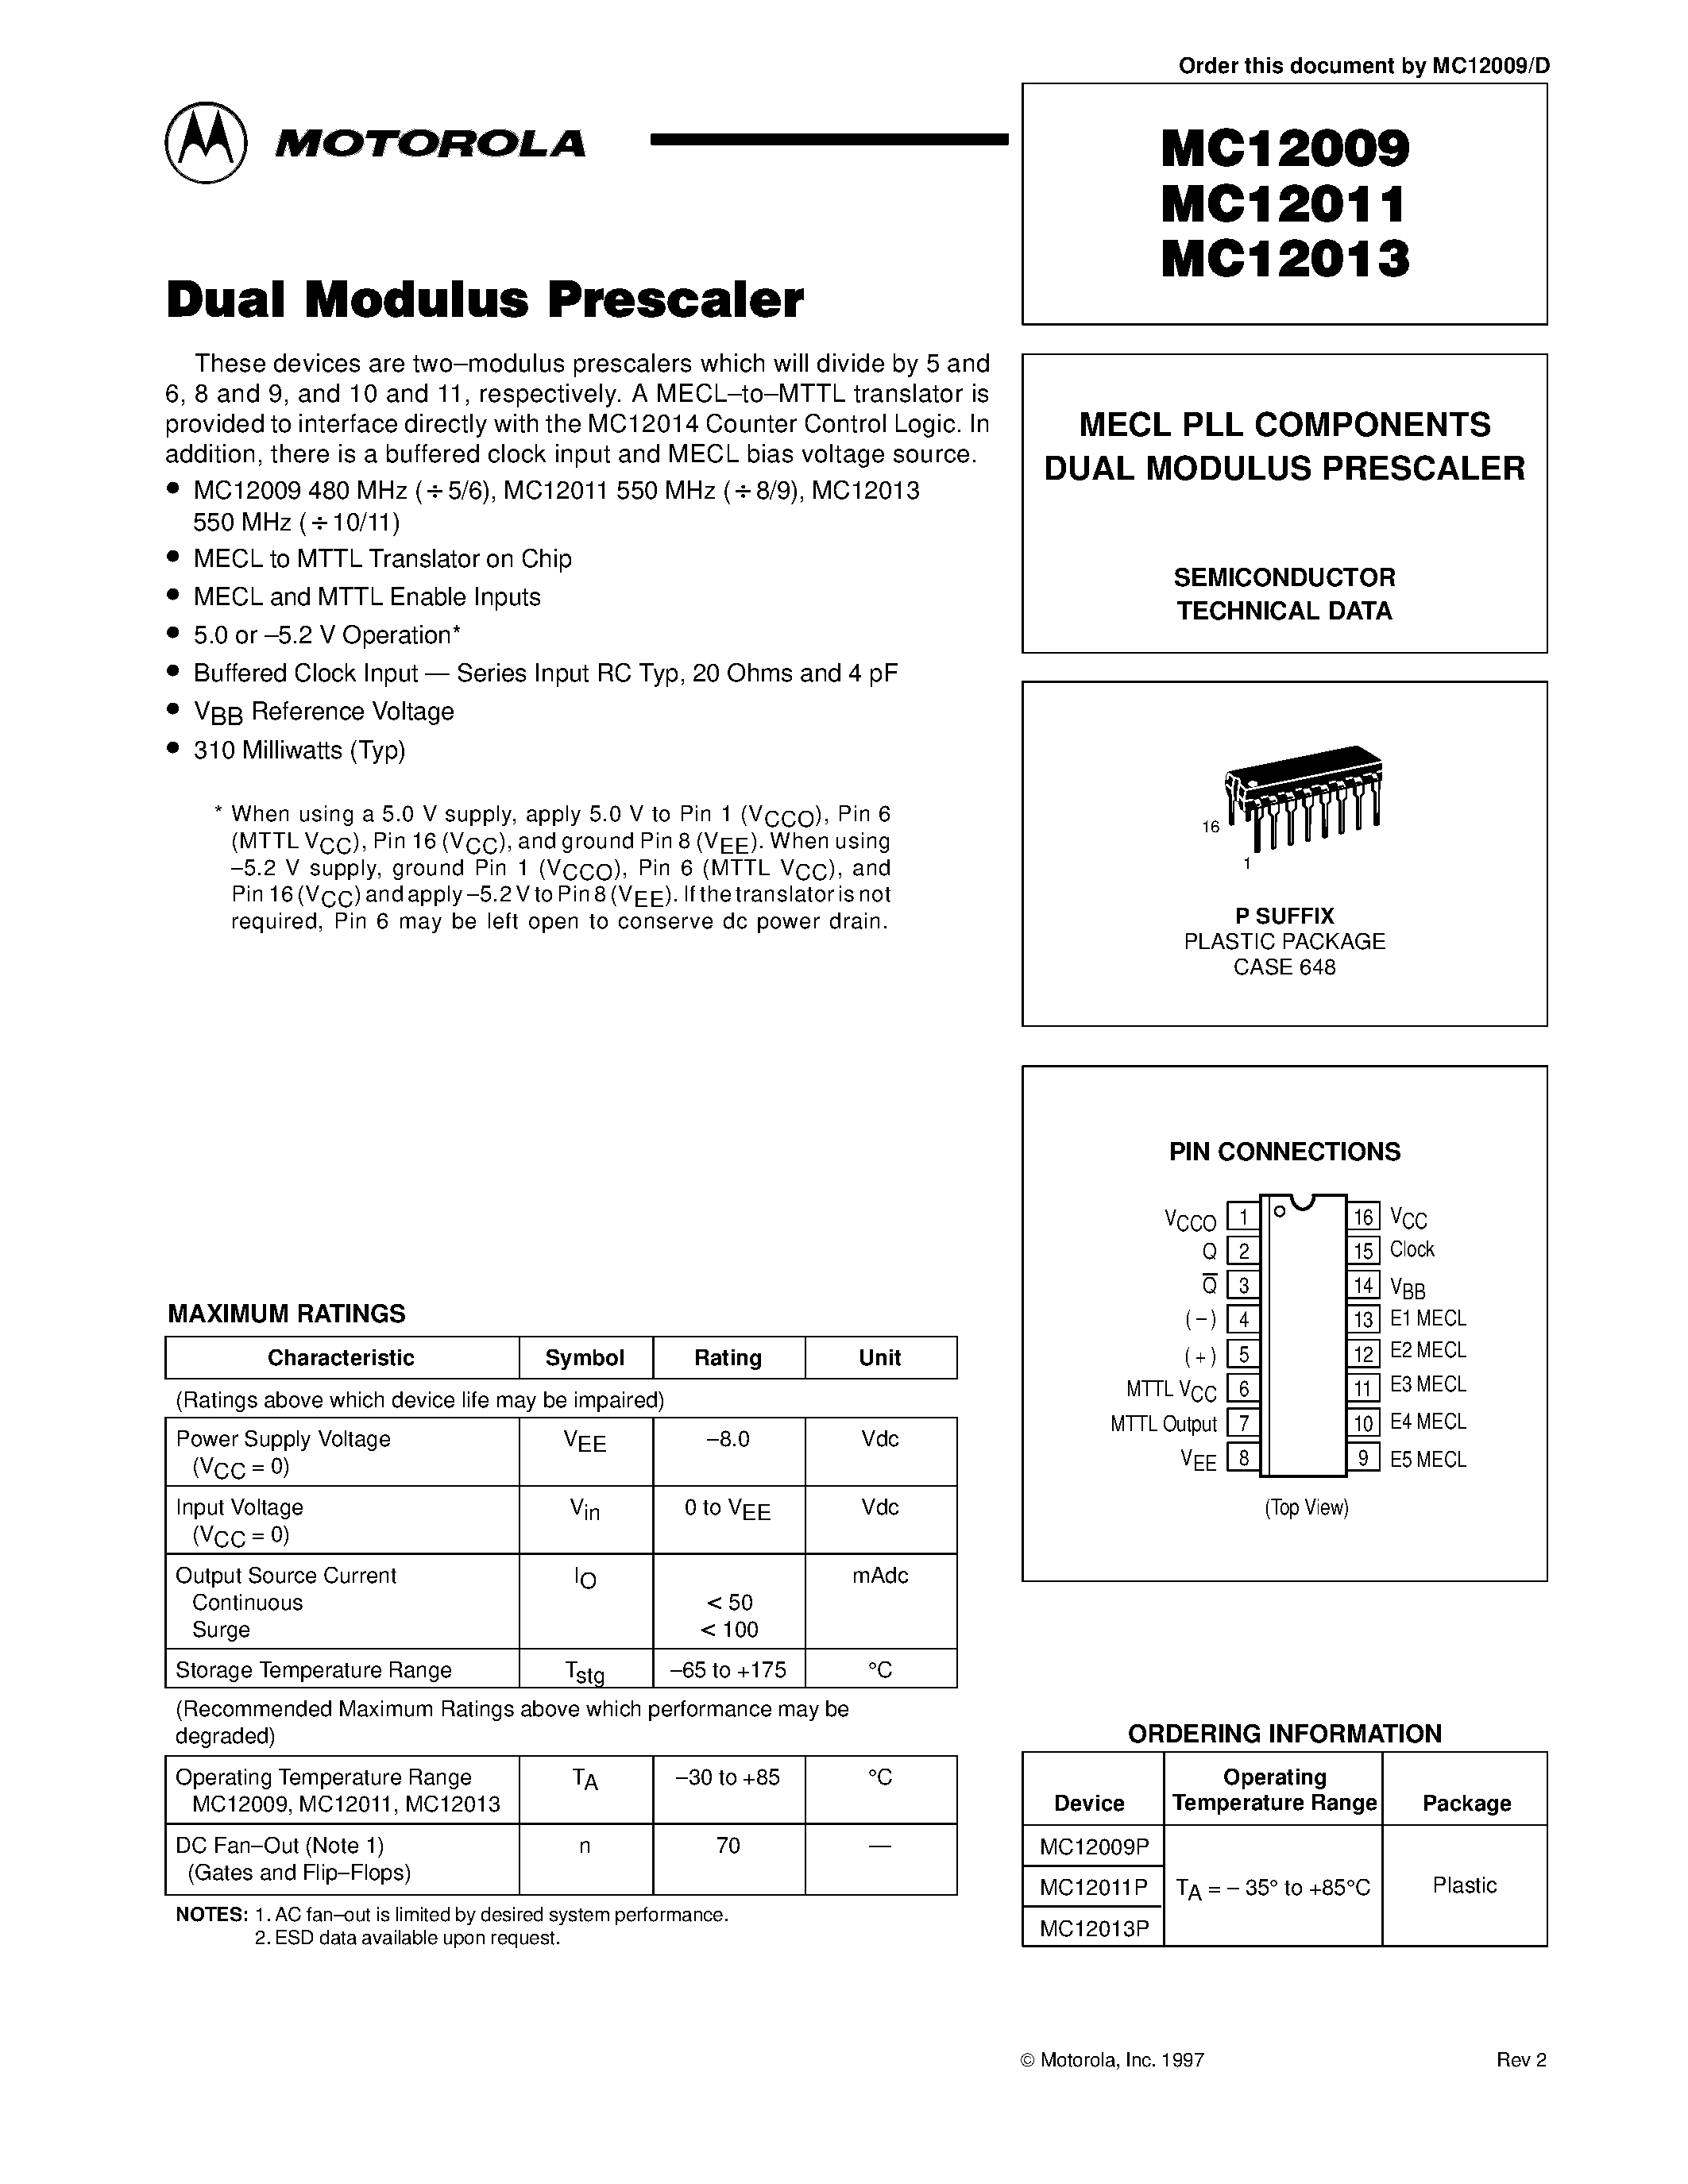 Datasheet MC12011P - MECL PLL COMPONENTS DUAL MODULUS PRESCALER page 1